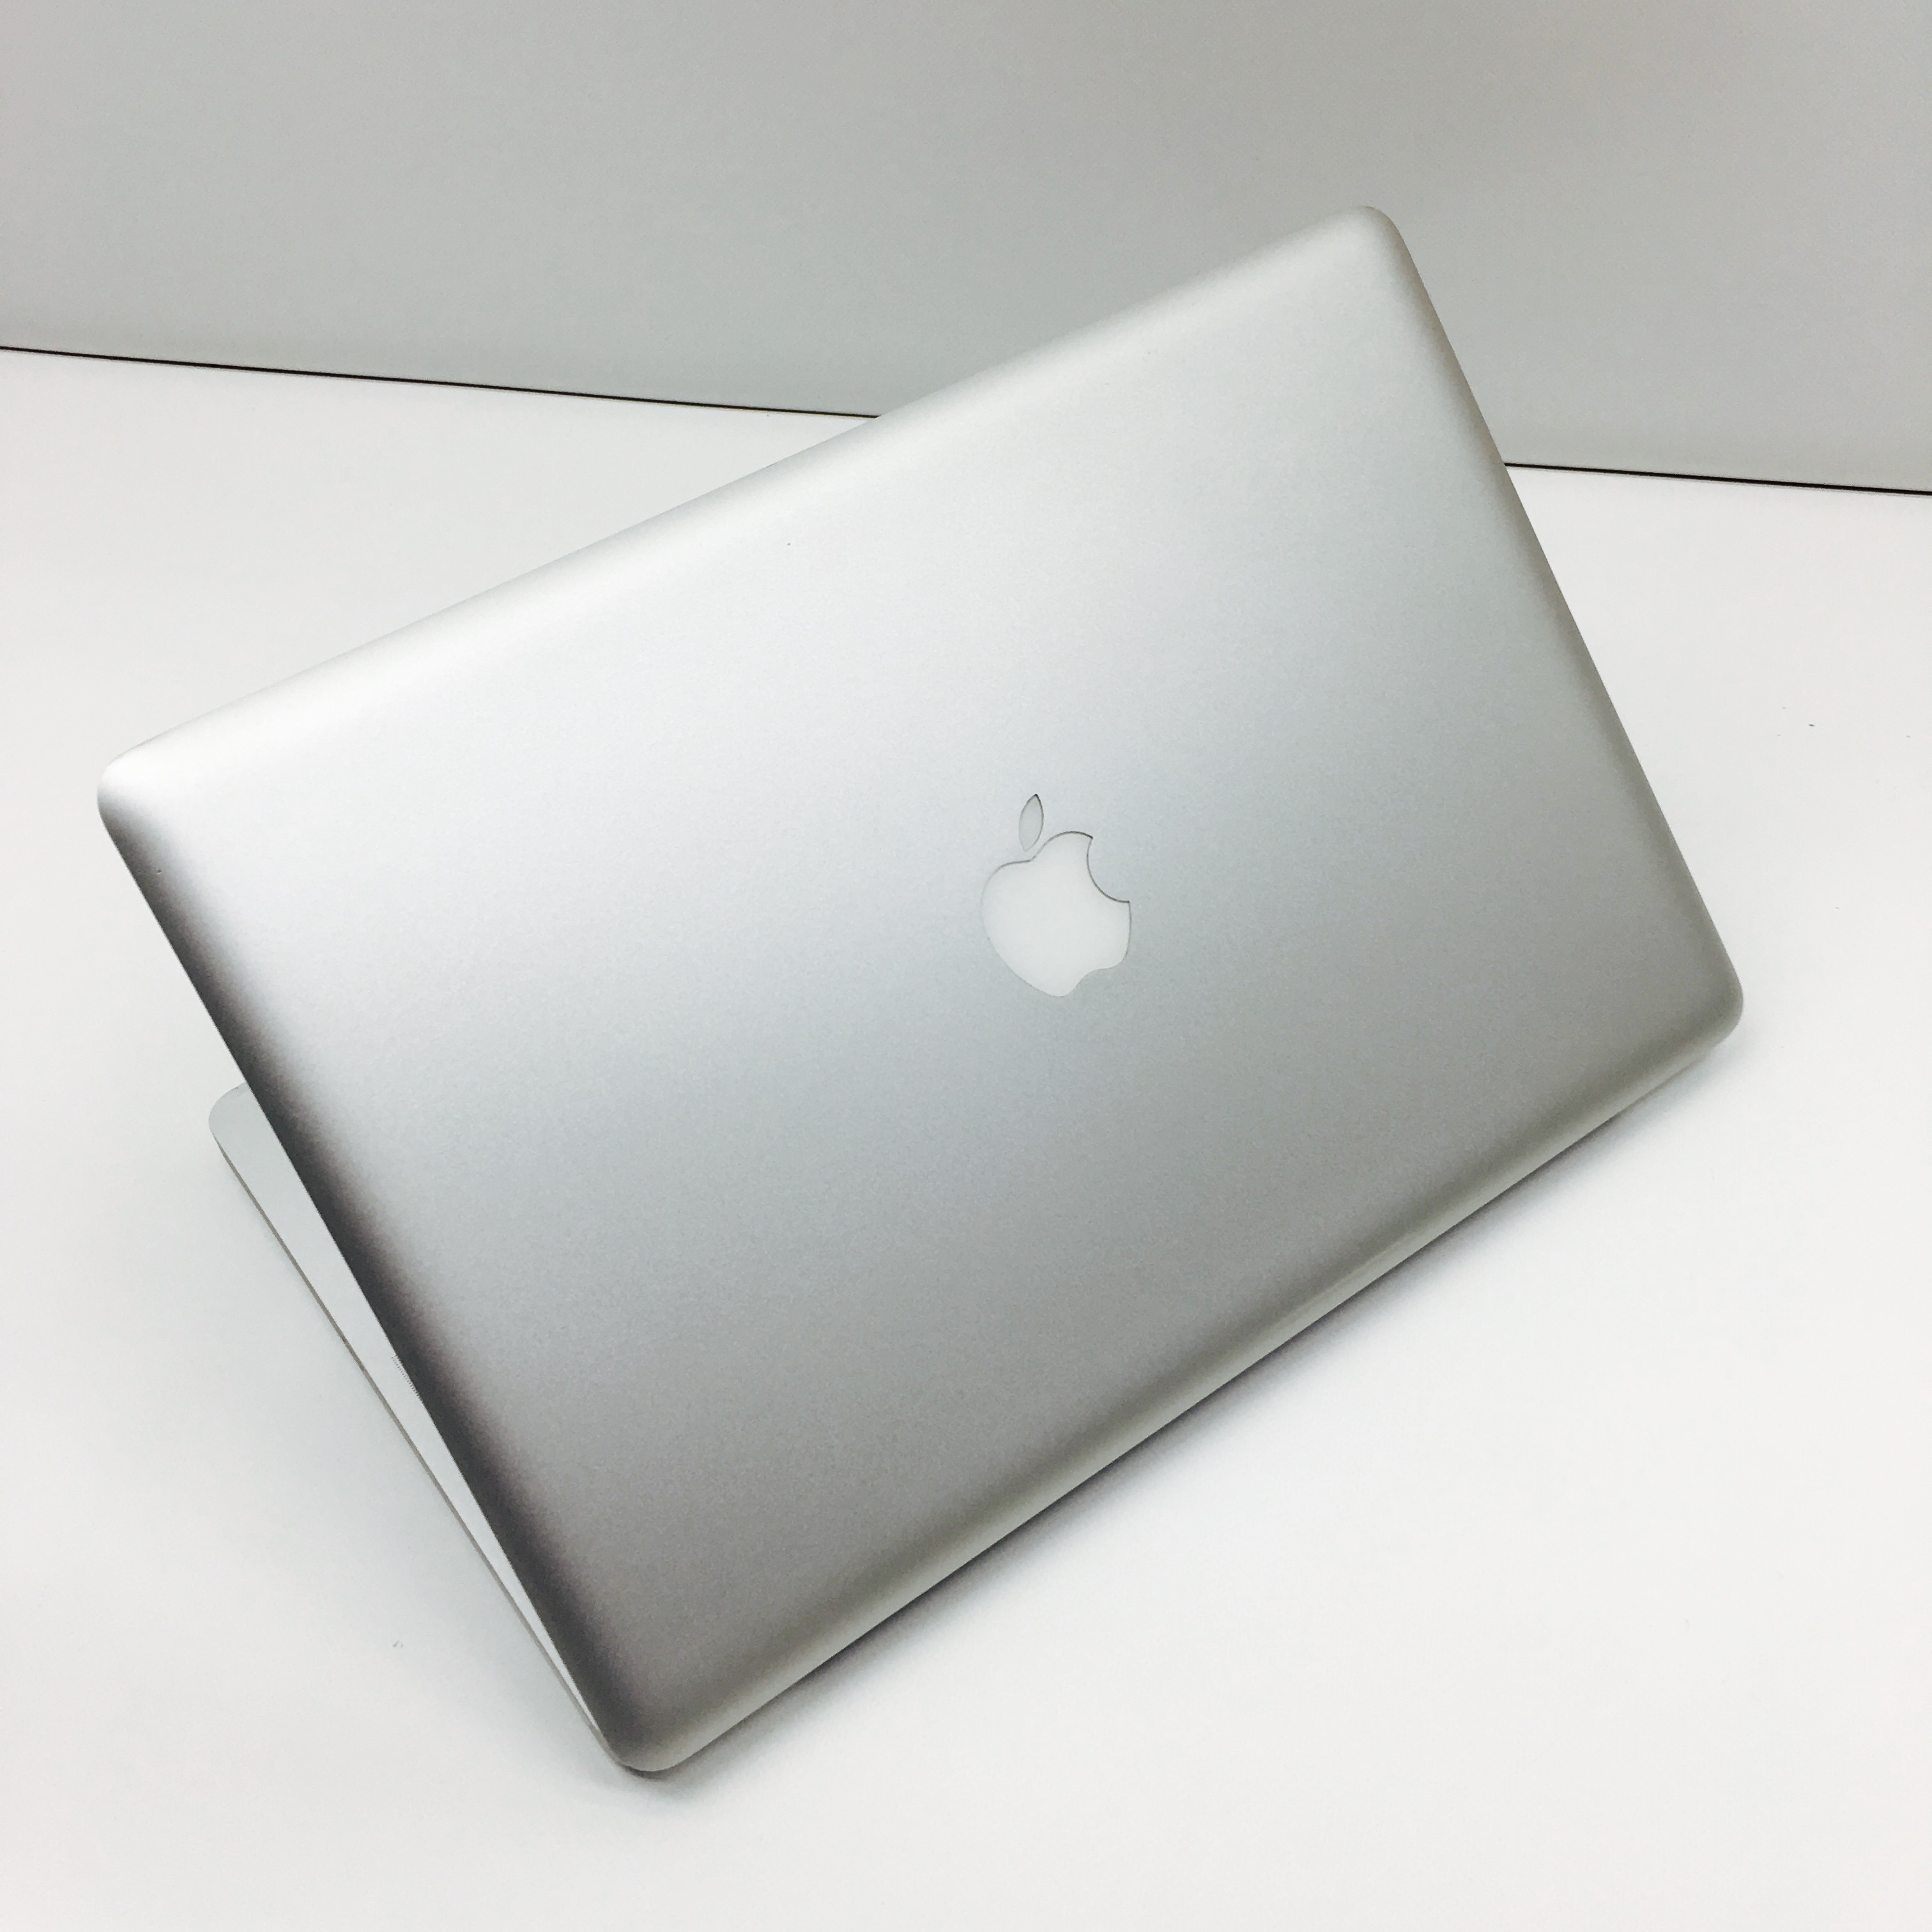 used 2011 macbook pro 13 inch